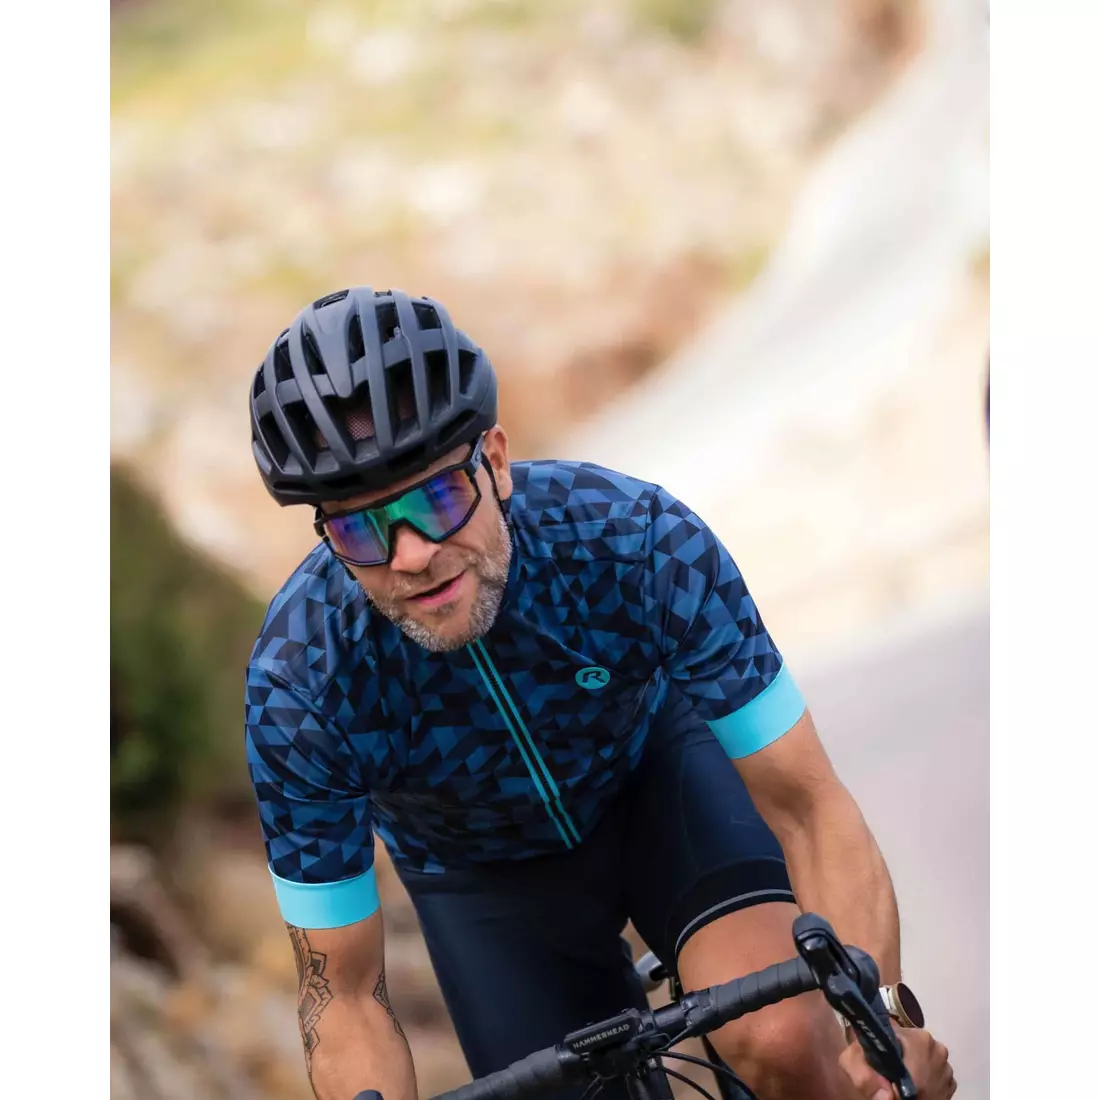 Rogelli RUBIK men's cycling jersey, grey-turquoise